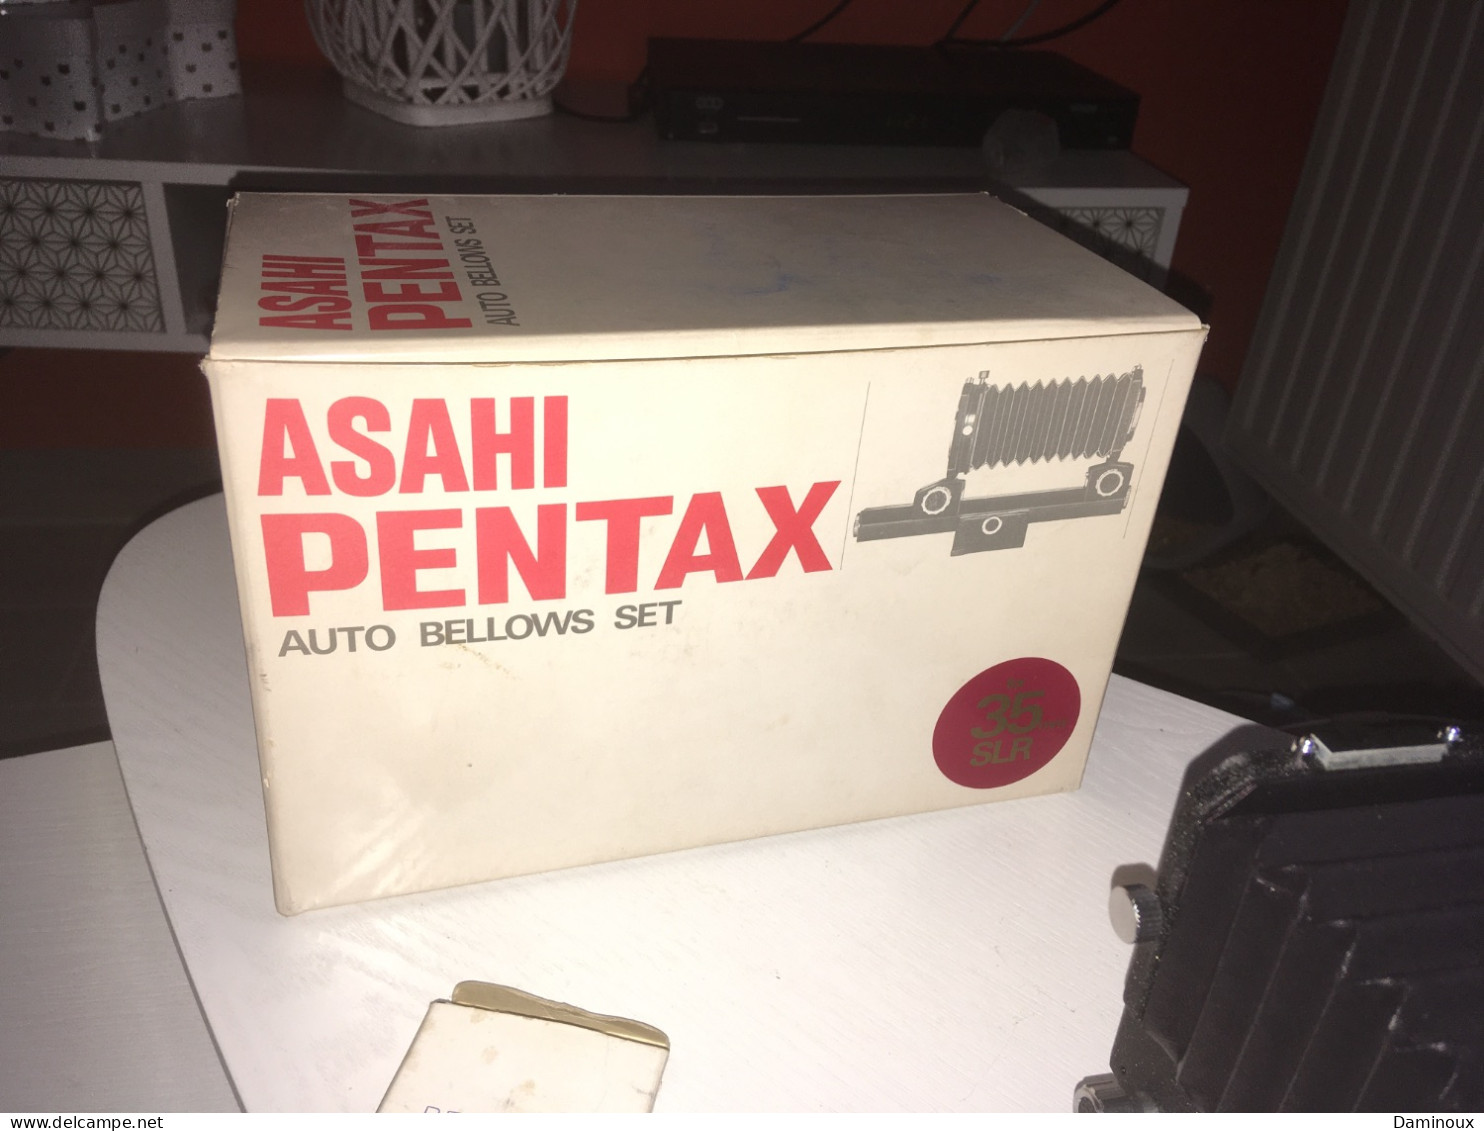 Lot Asahi Pentax: Auto Bellows, Slide Copier, Micriscope Adapter II, Reverse Adapter